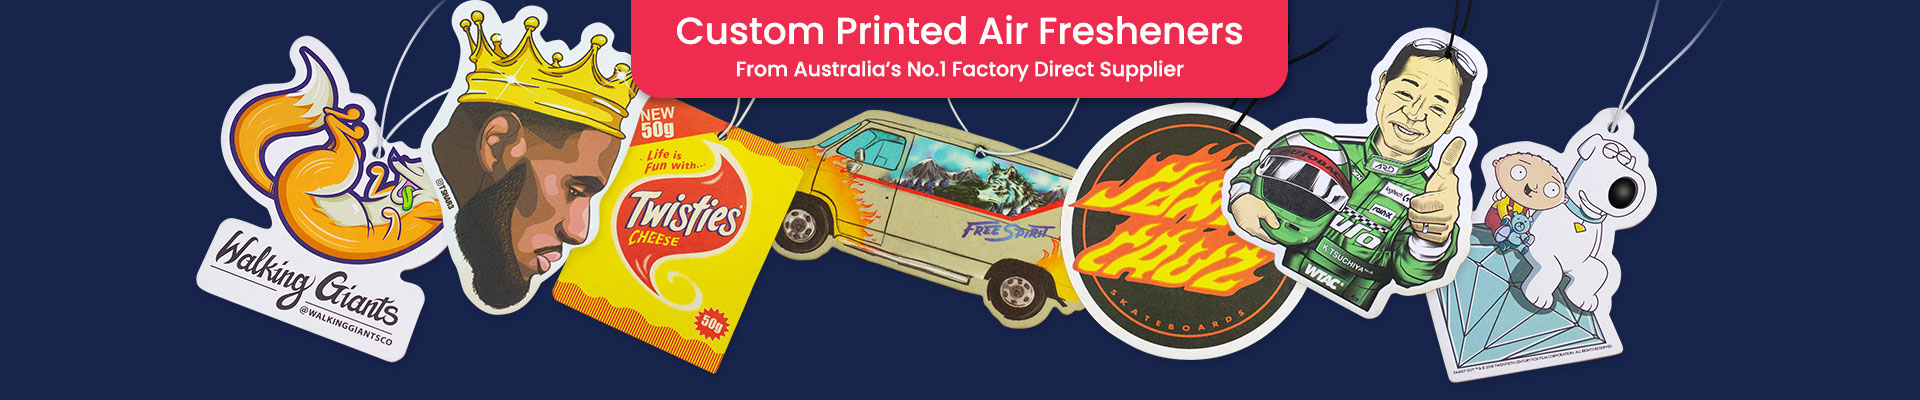 Printed Air Fresheners